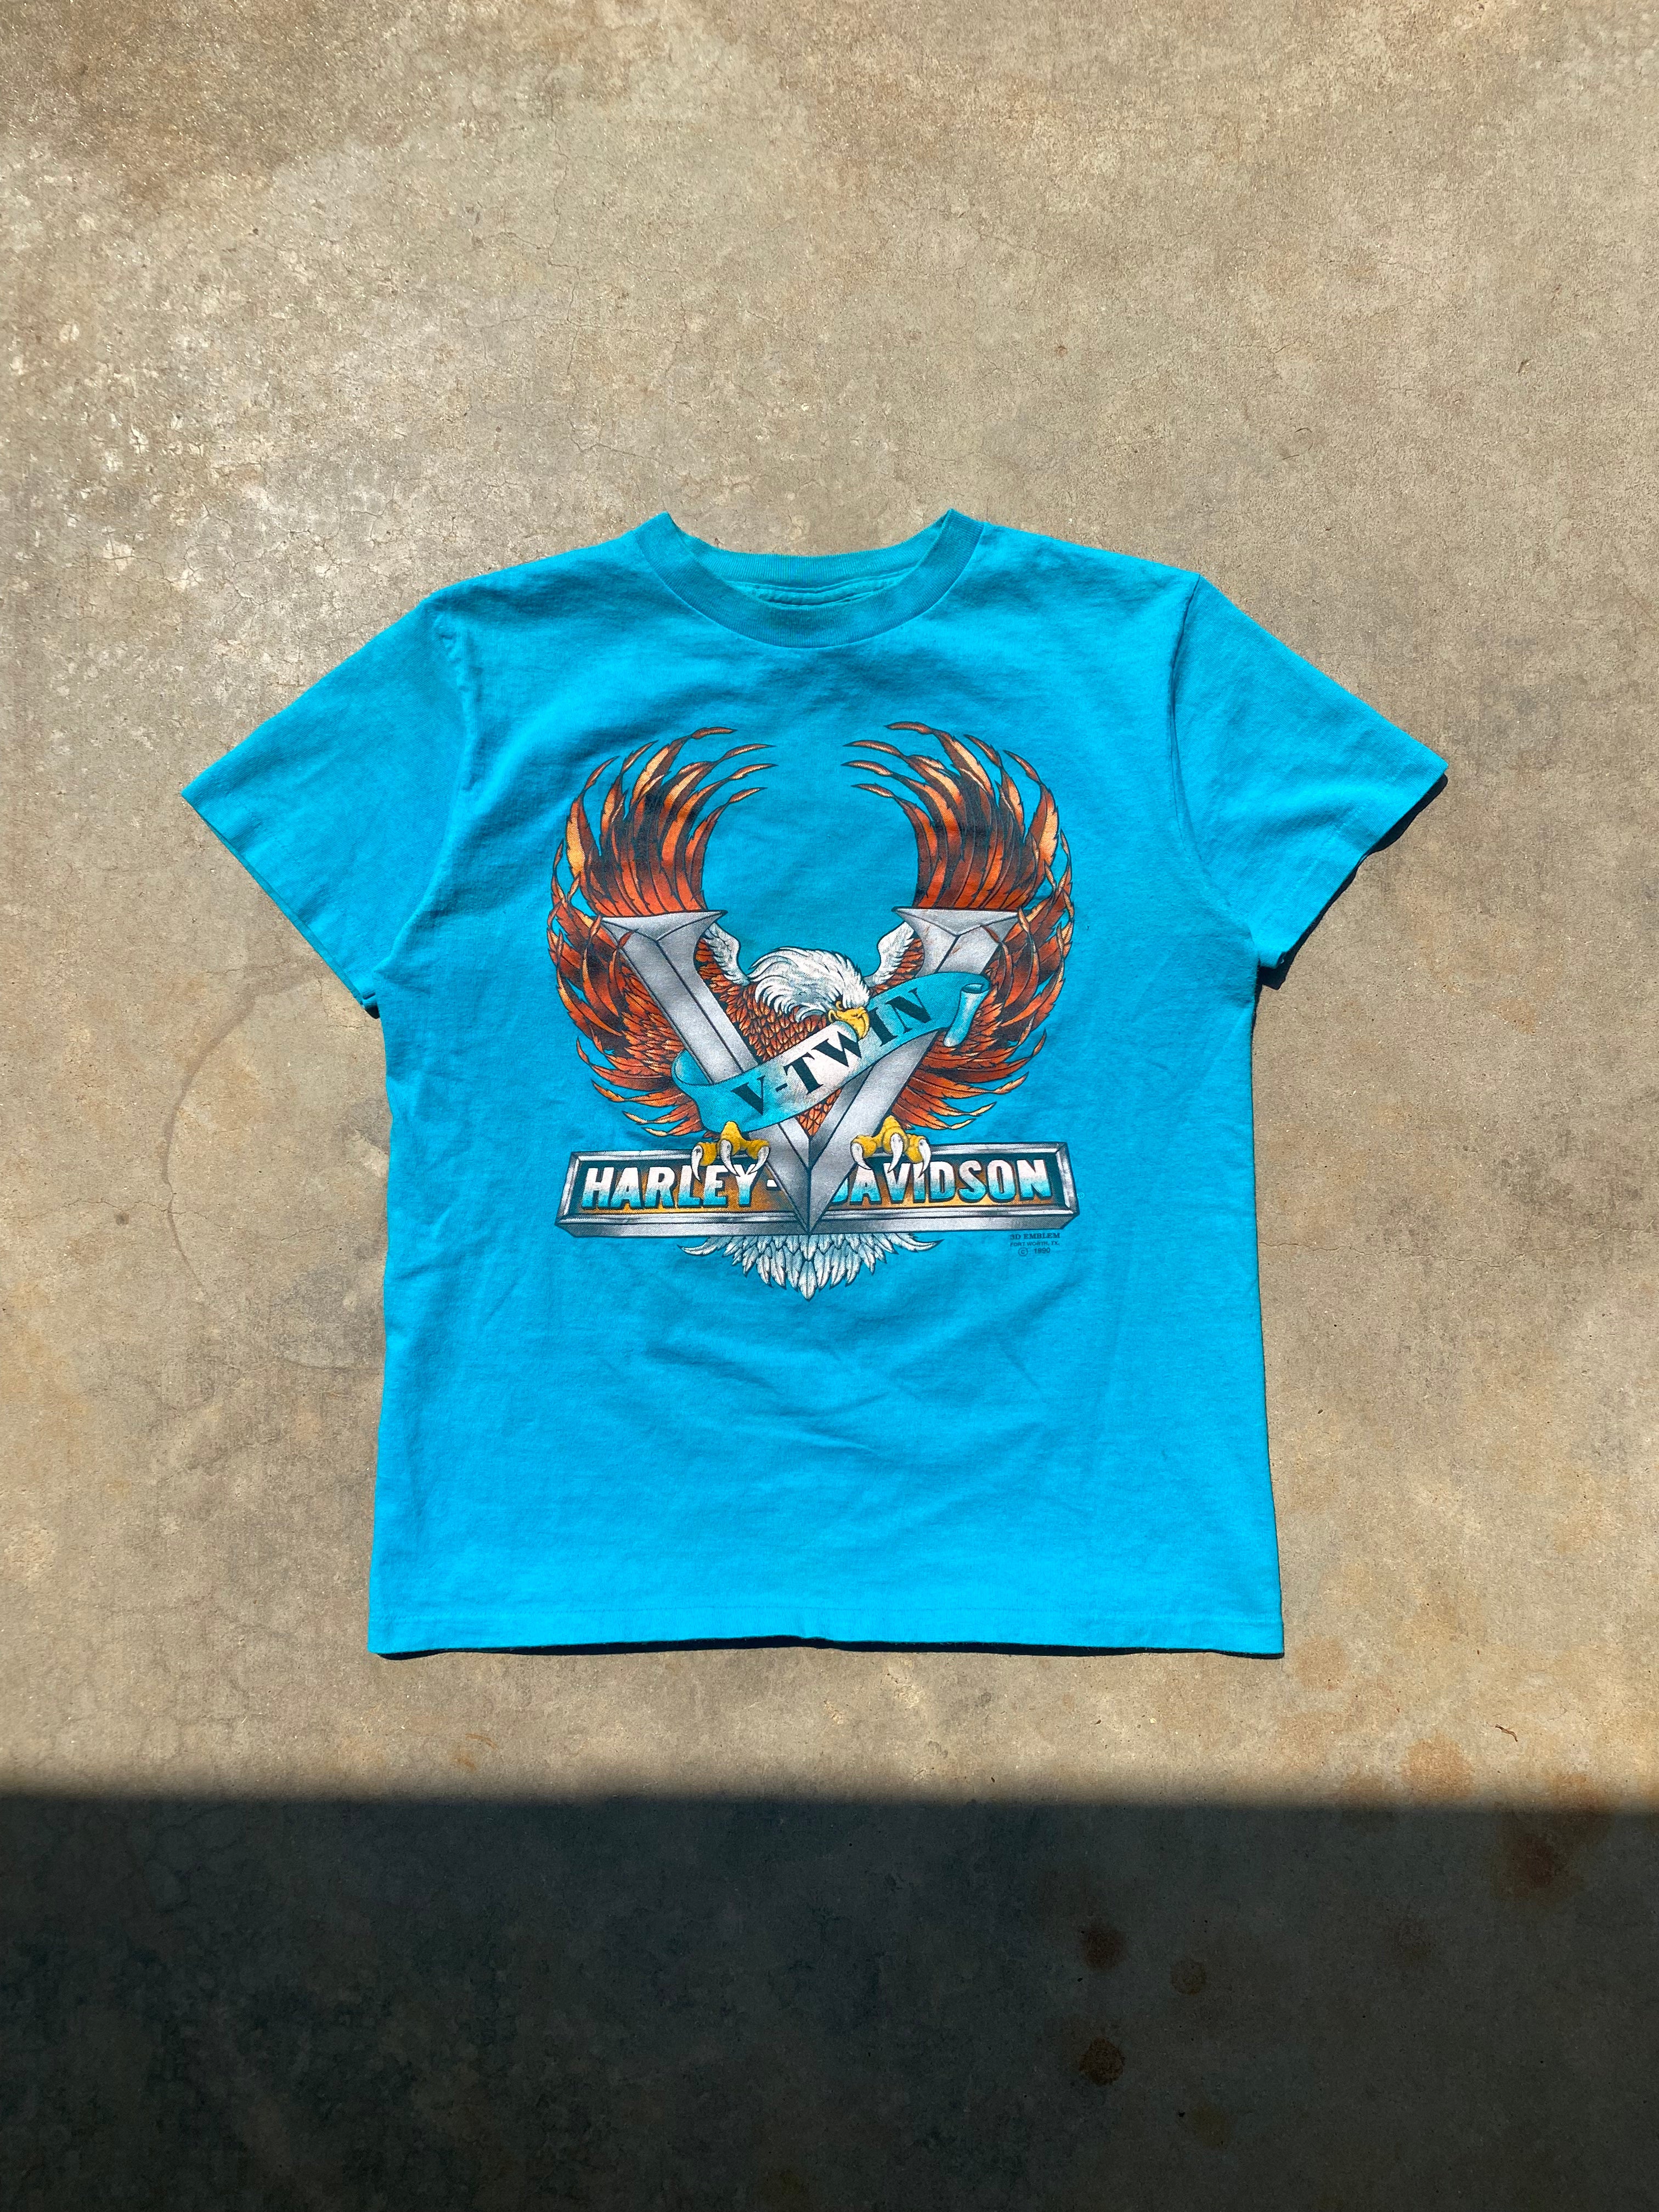 1990 Harley Davidson V-Twin 3D Emblem T-Shirt (S/M)